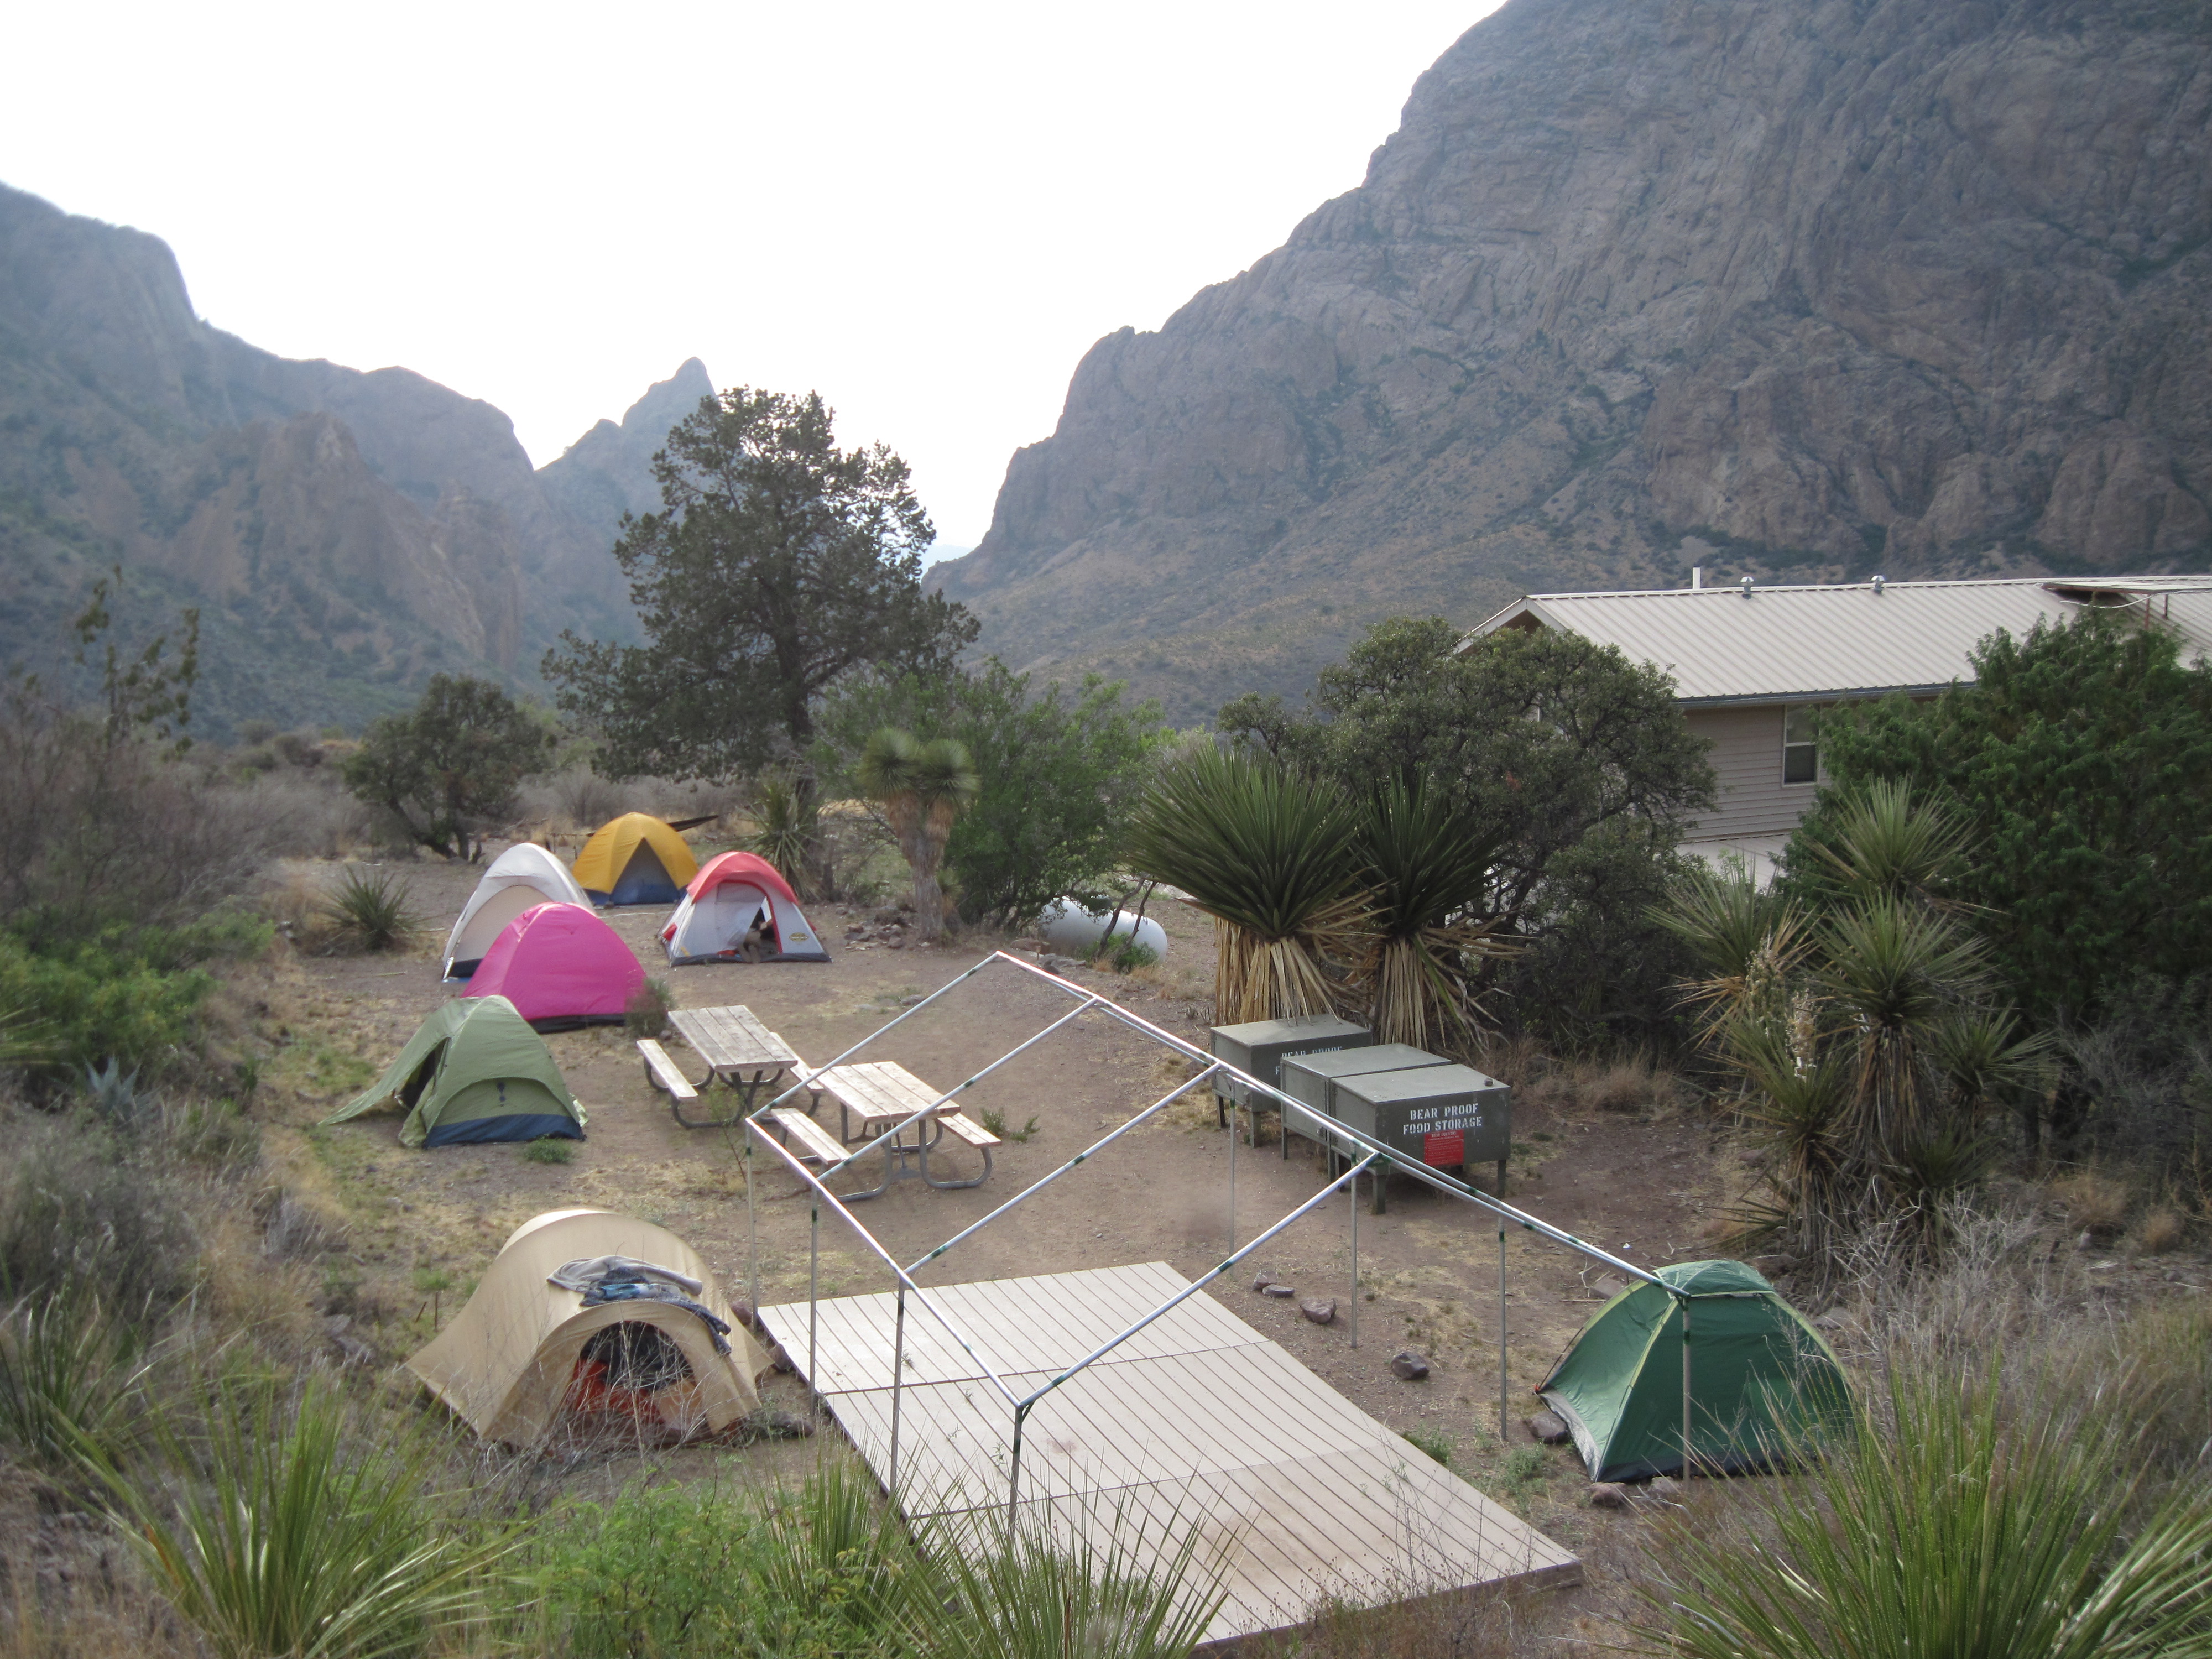 Remuda camping area, near The Window